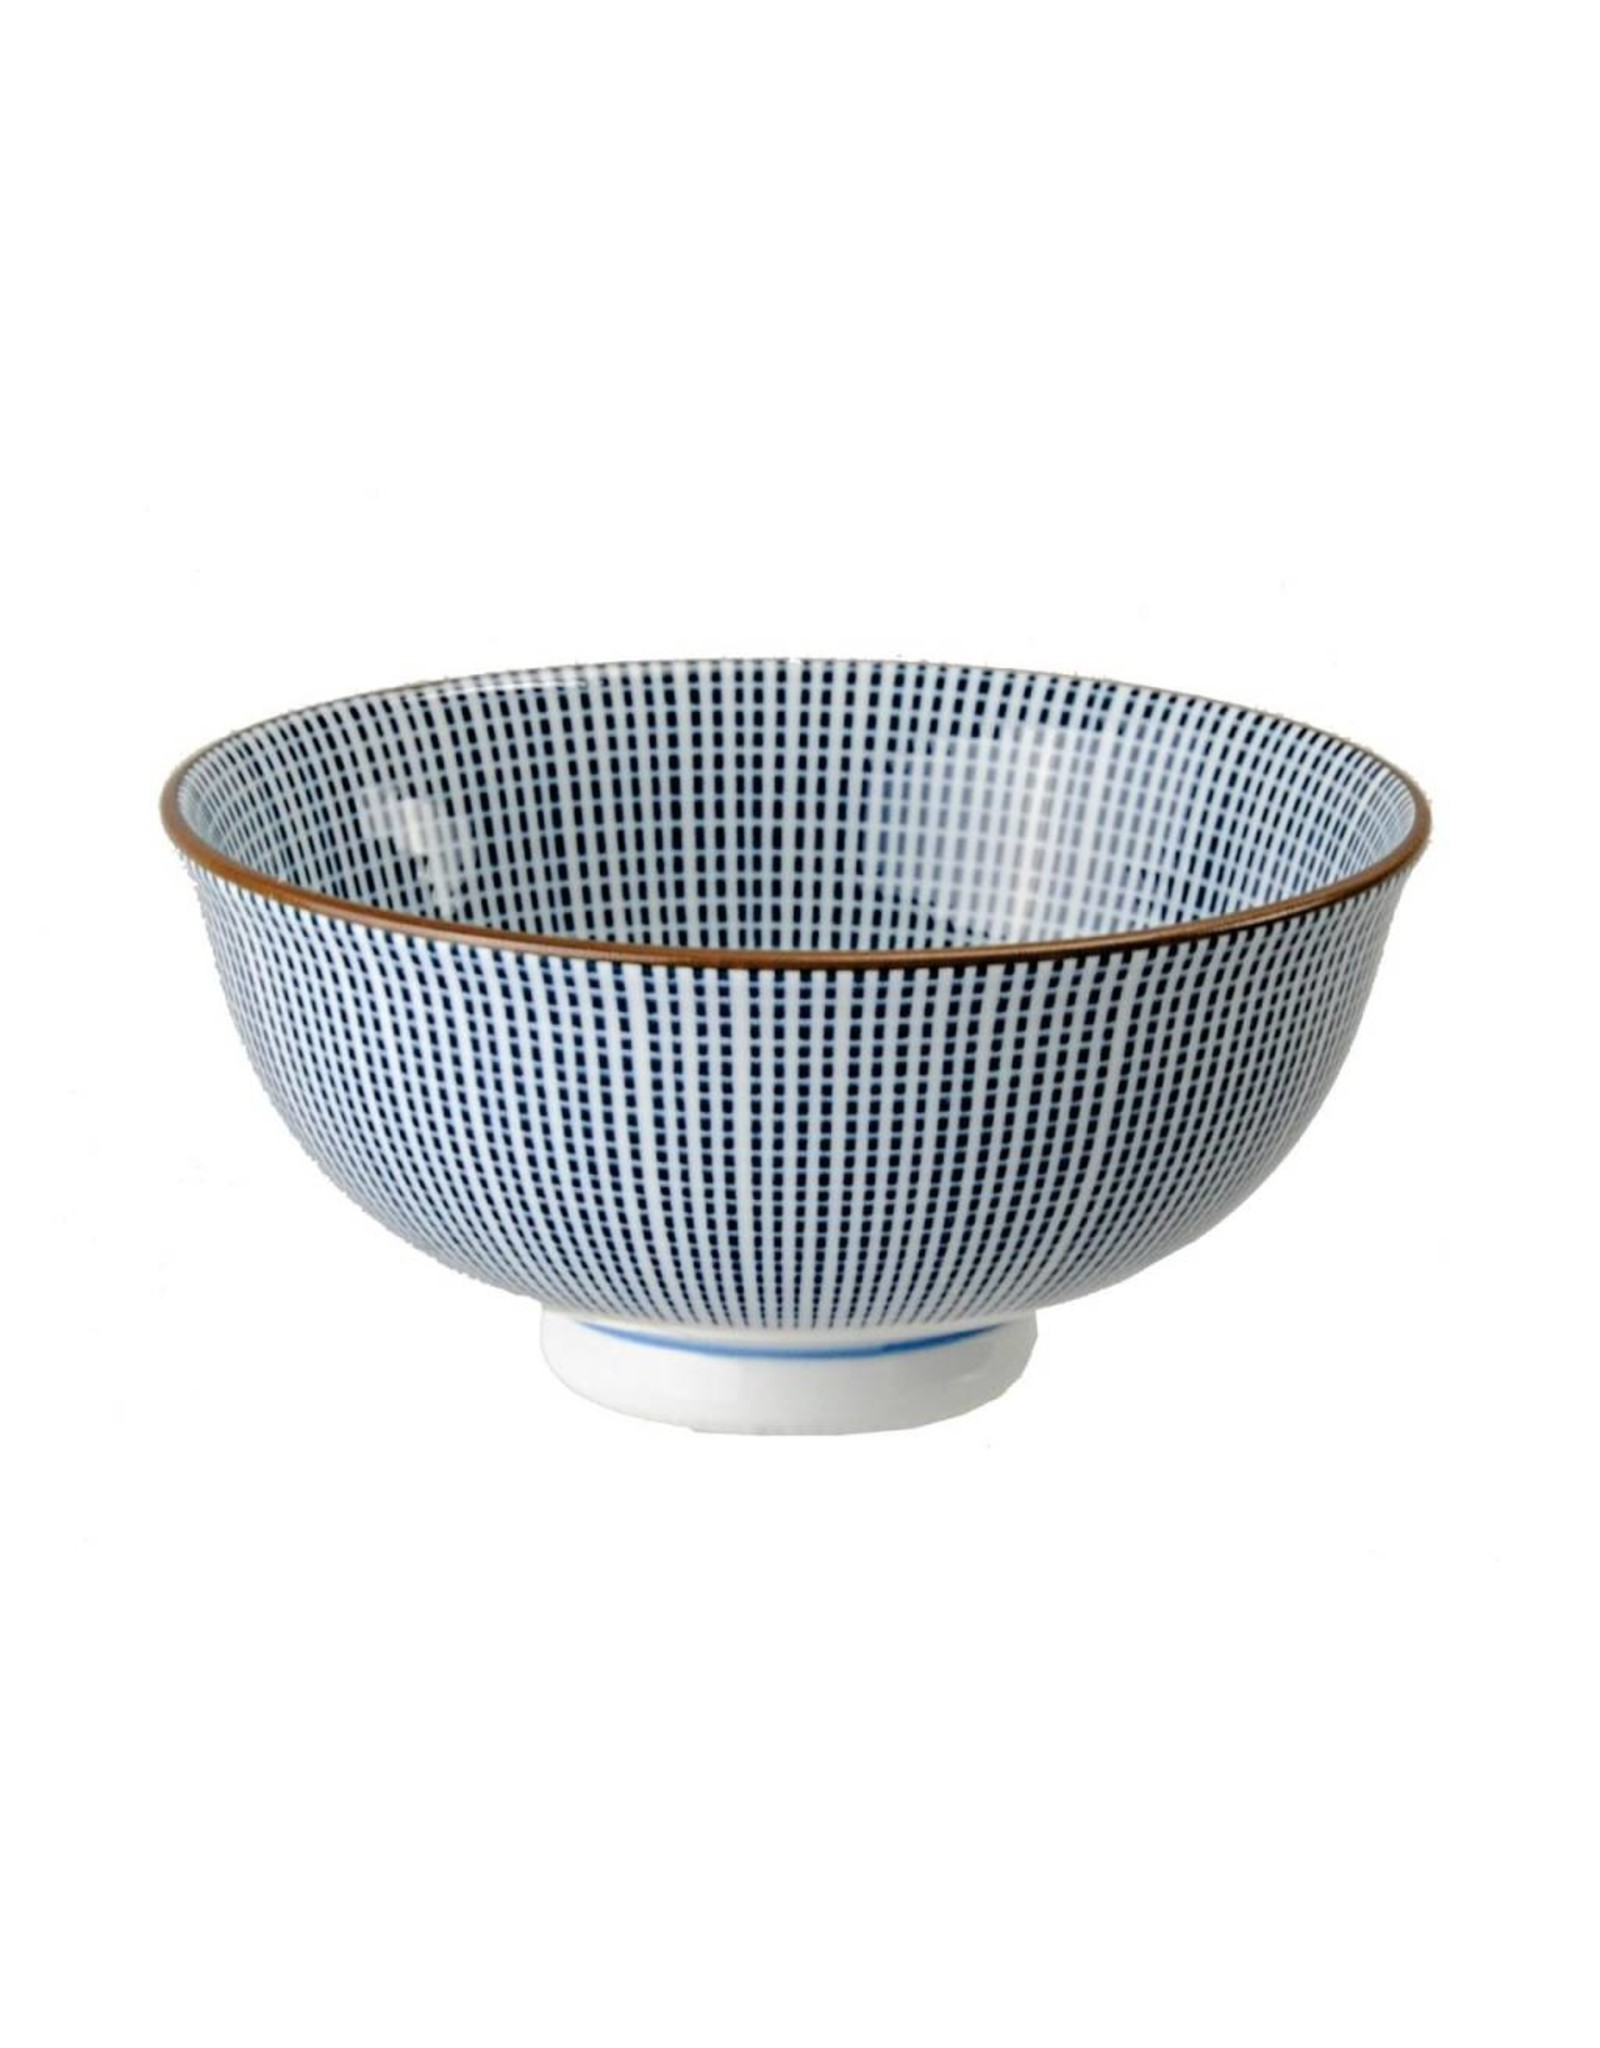 Tokyo Design Studio Sendan Blue rice bowl11.8x5.5cm 300ml